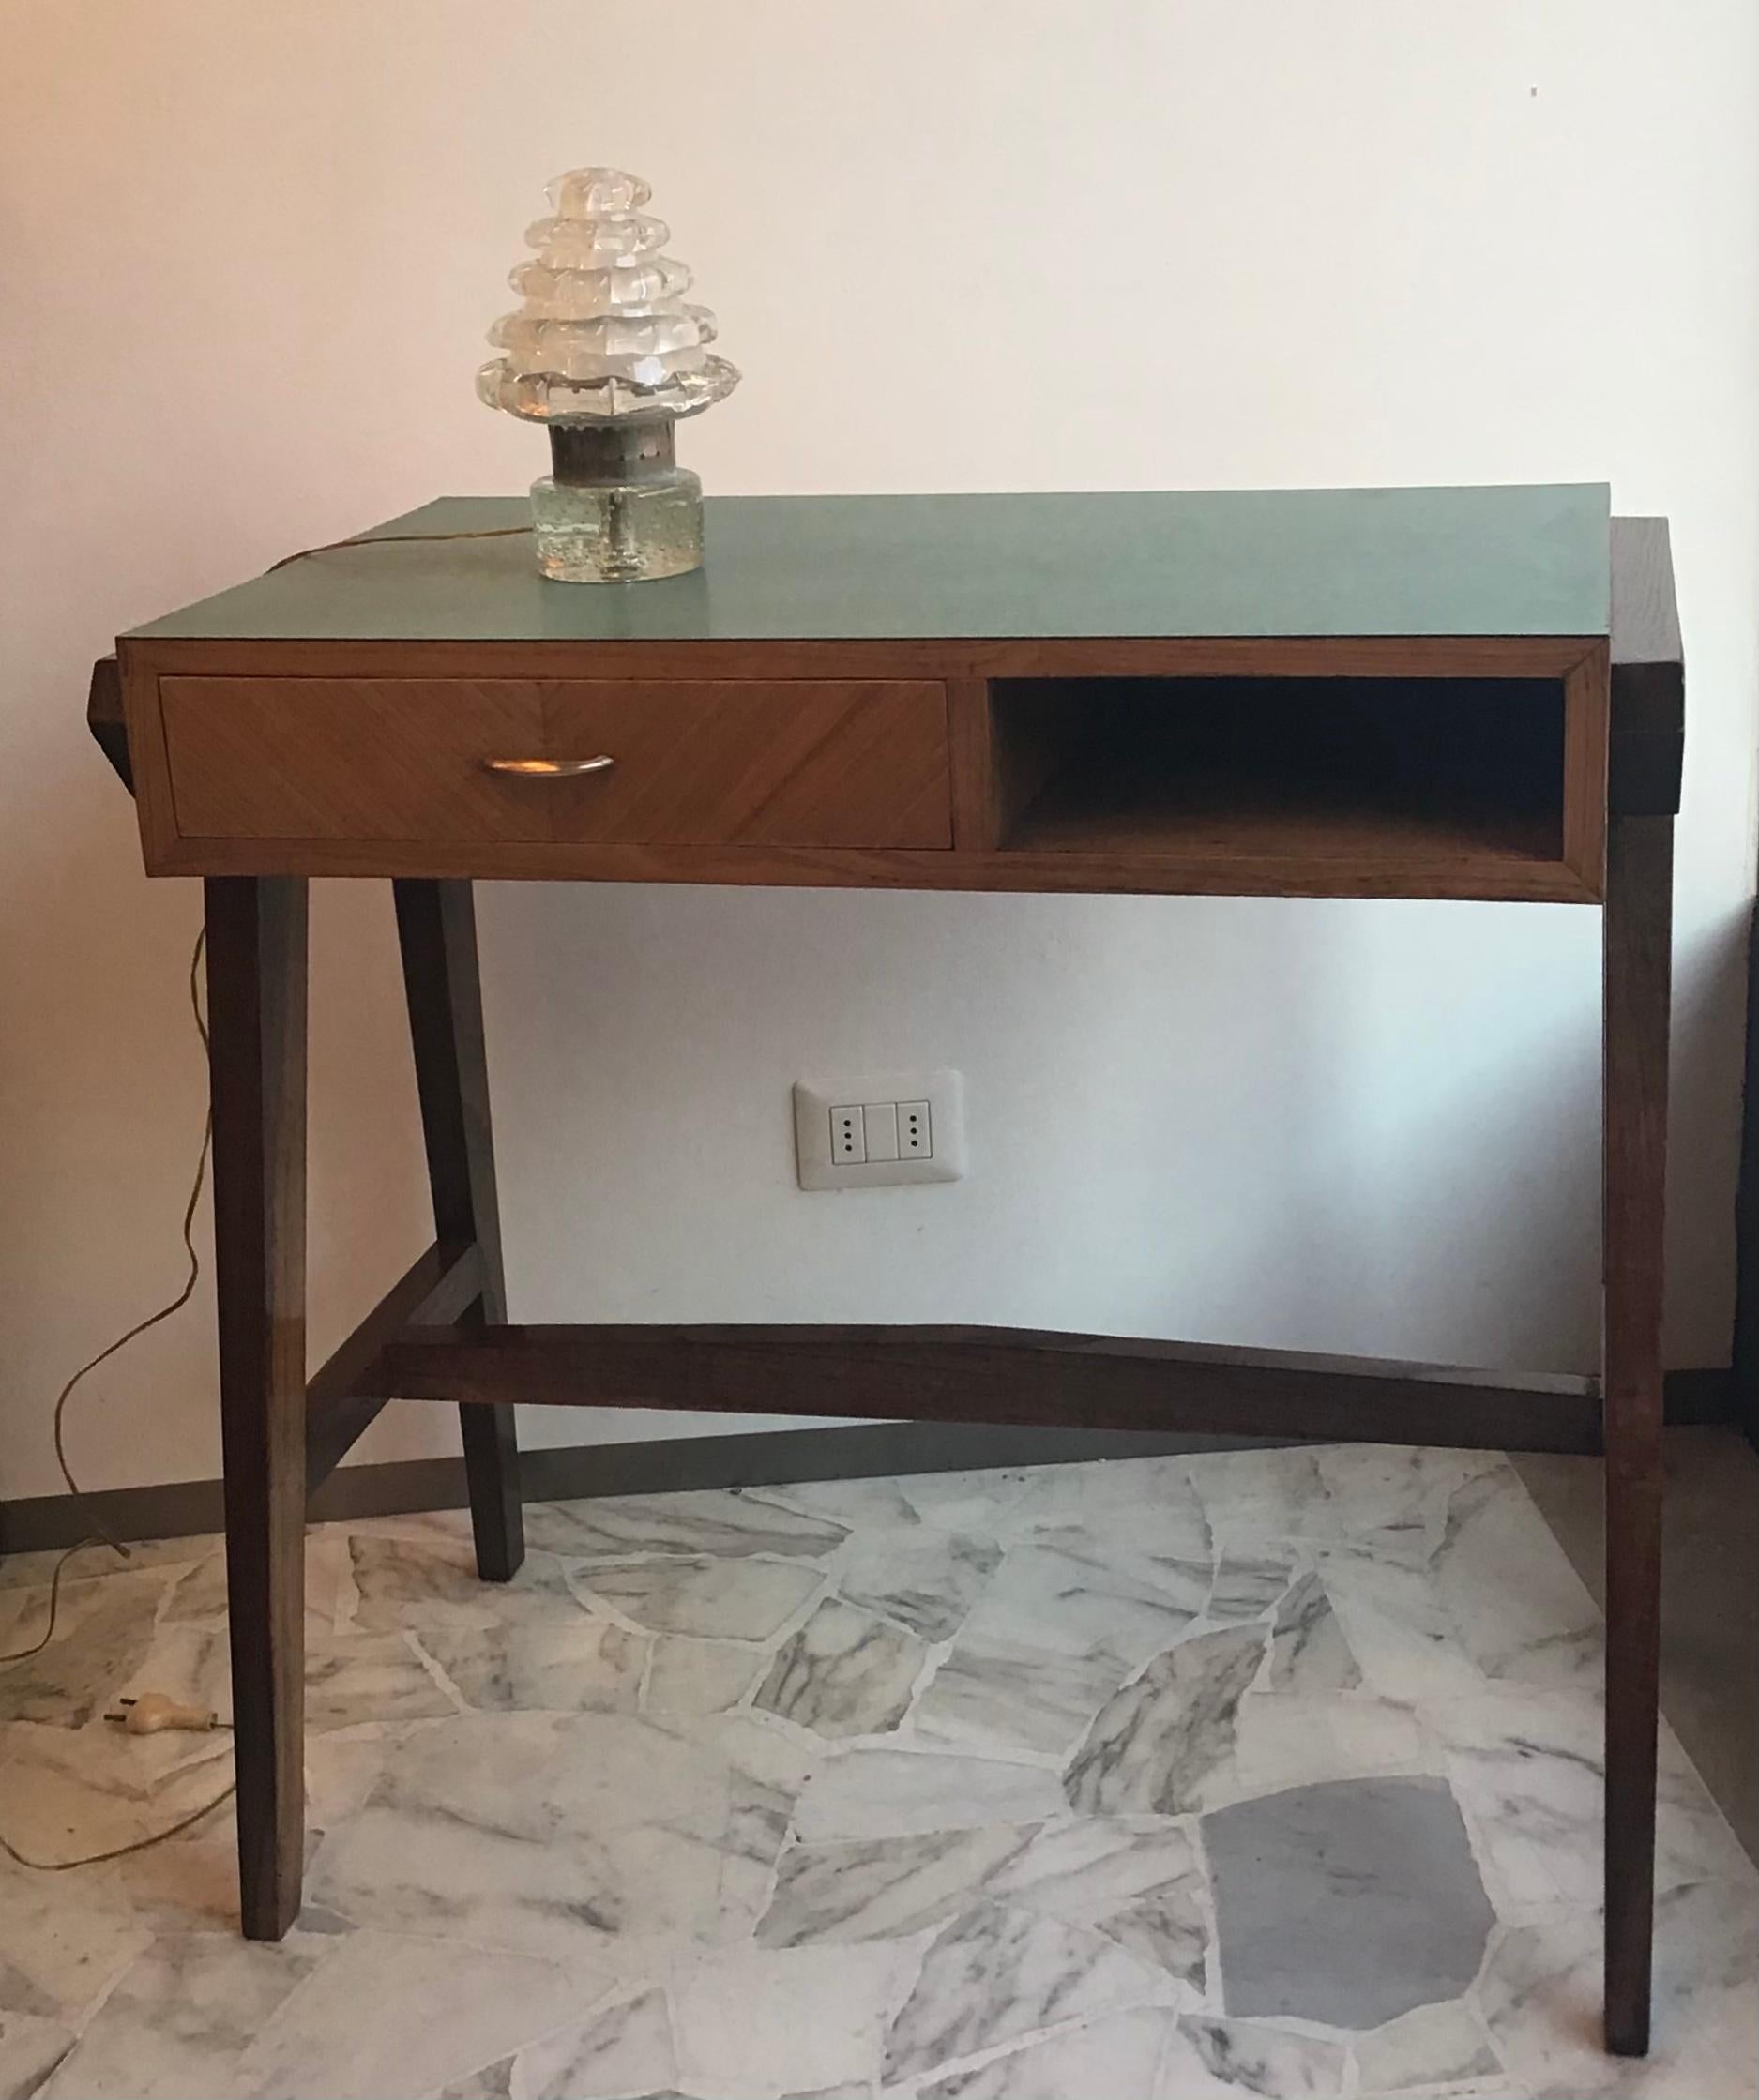 Gio Ponti “Stile” desk wood brass, 1950, Italy.